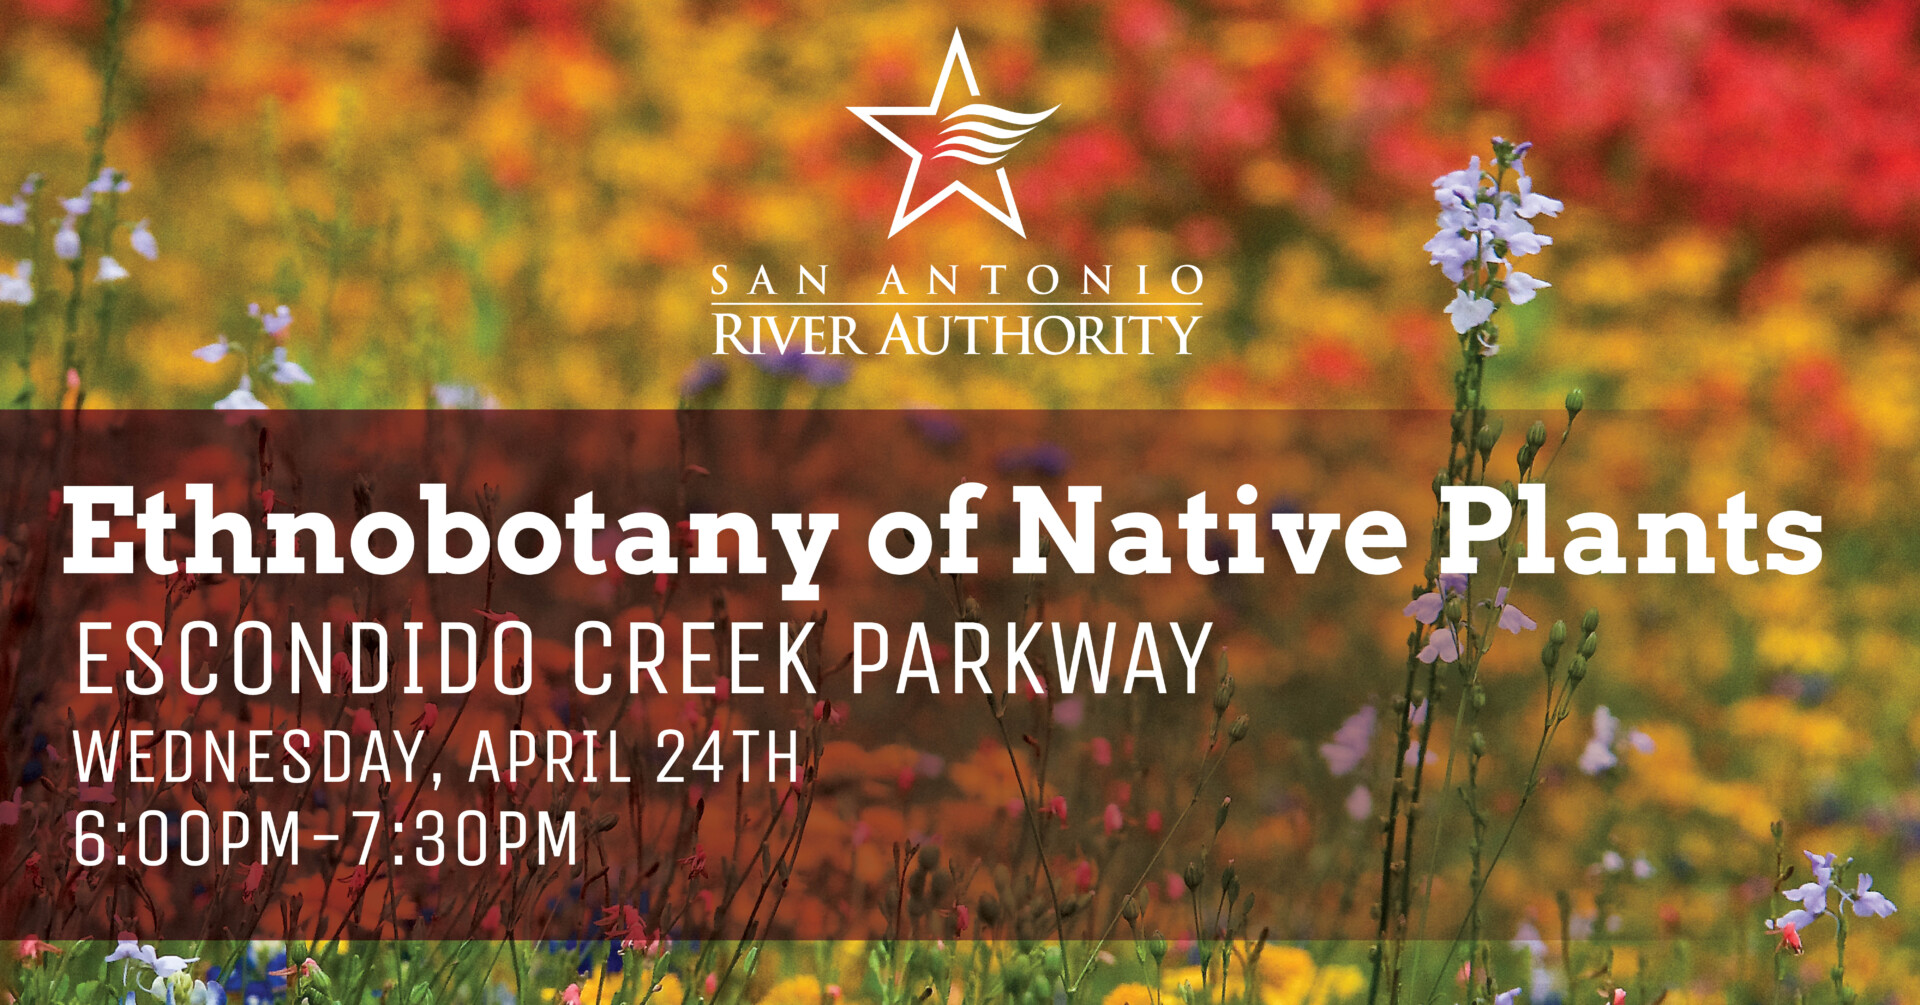 Ethnobotany of Native Plants at Escondido Creek Parkway